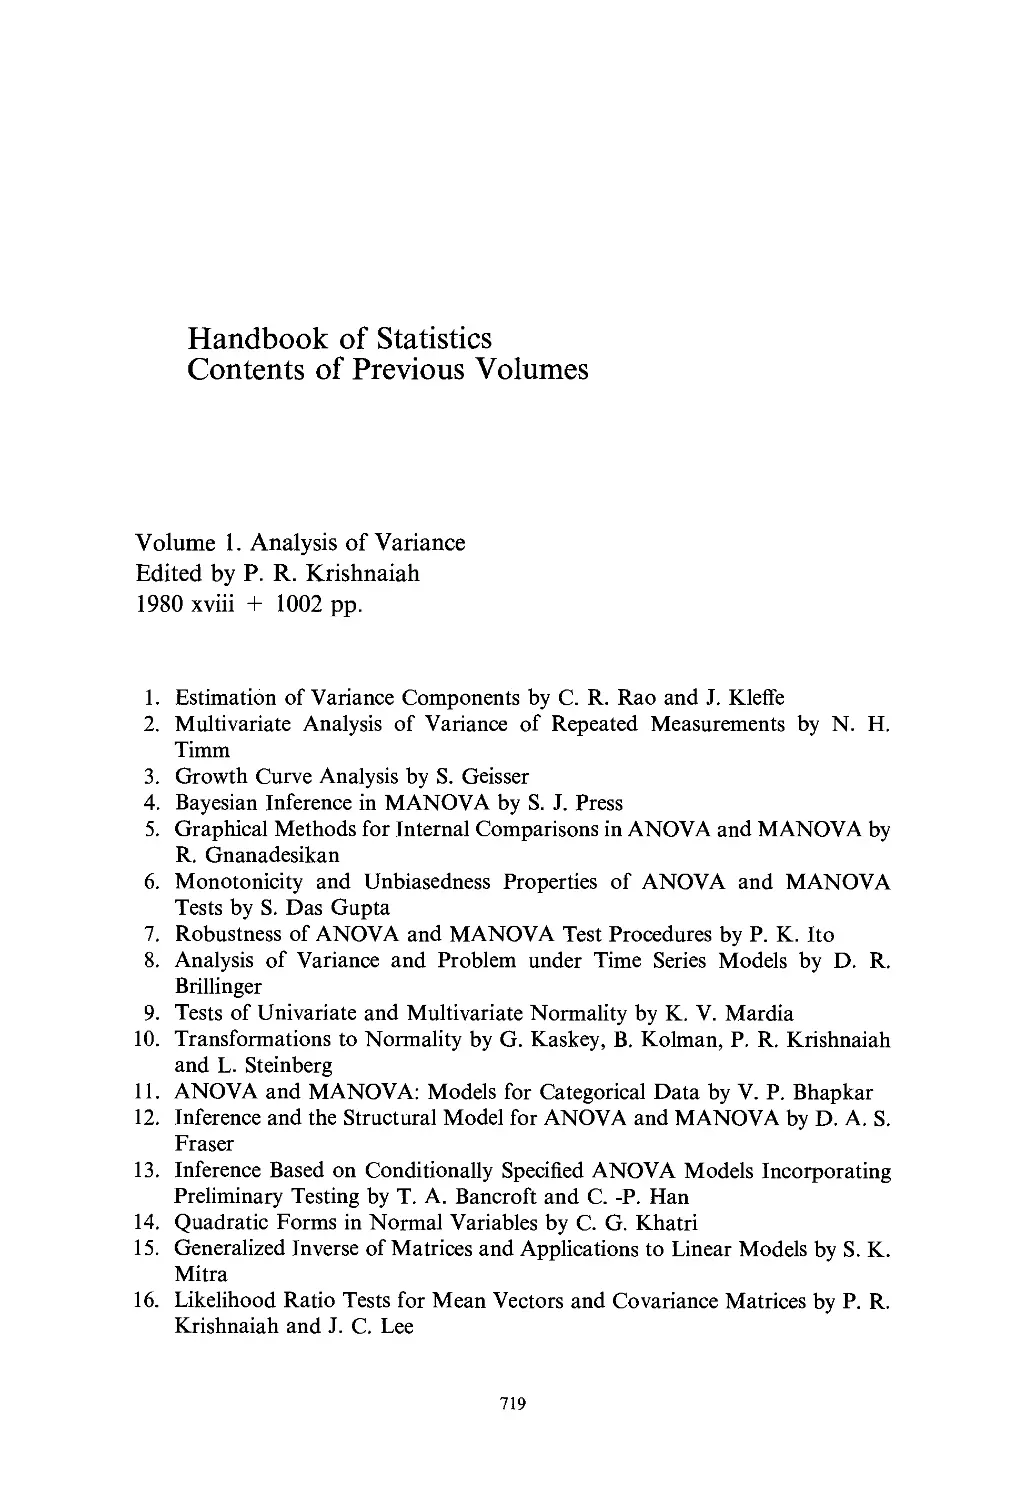 Handbook of Statistics: Contents of Previous Volumes